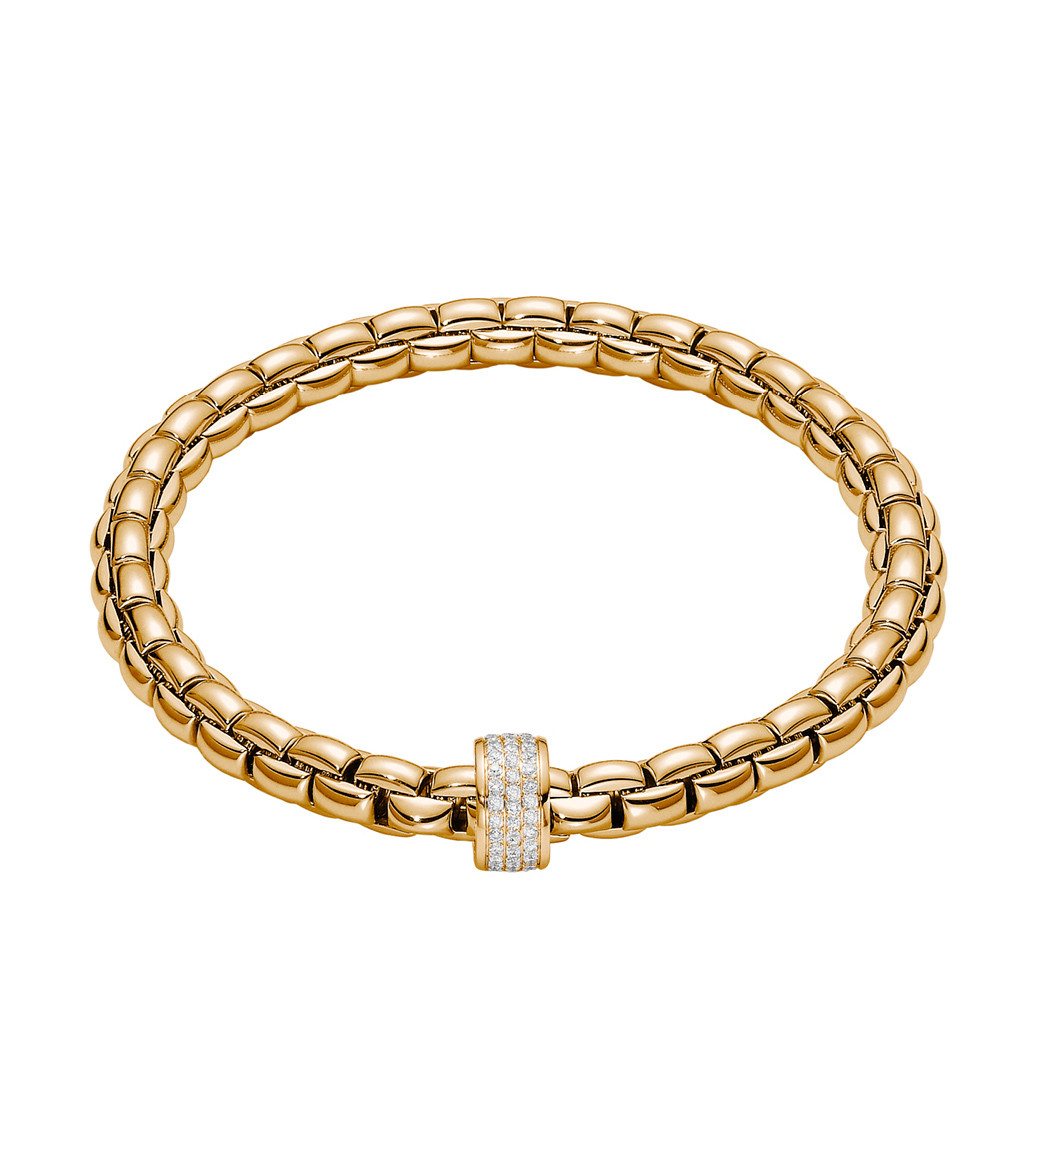 FOPE 18kt yellow and white gold Flexible white diamond bracelet